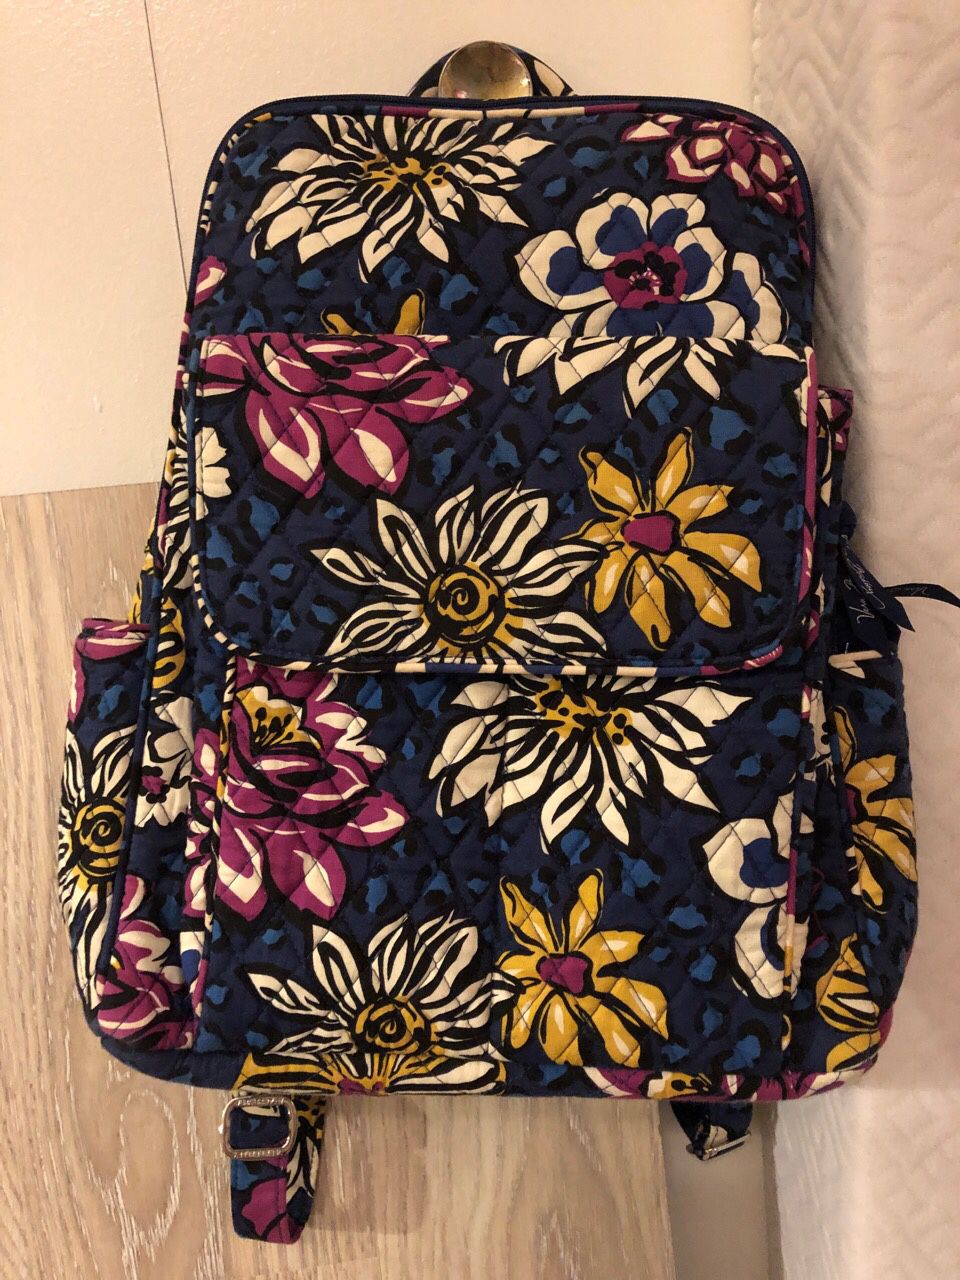 Vera Bradley Floral backpack